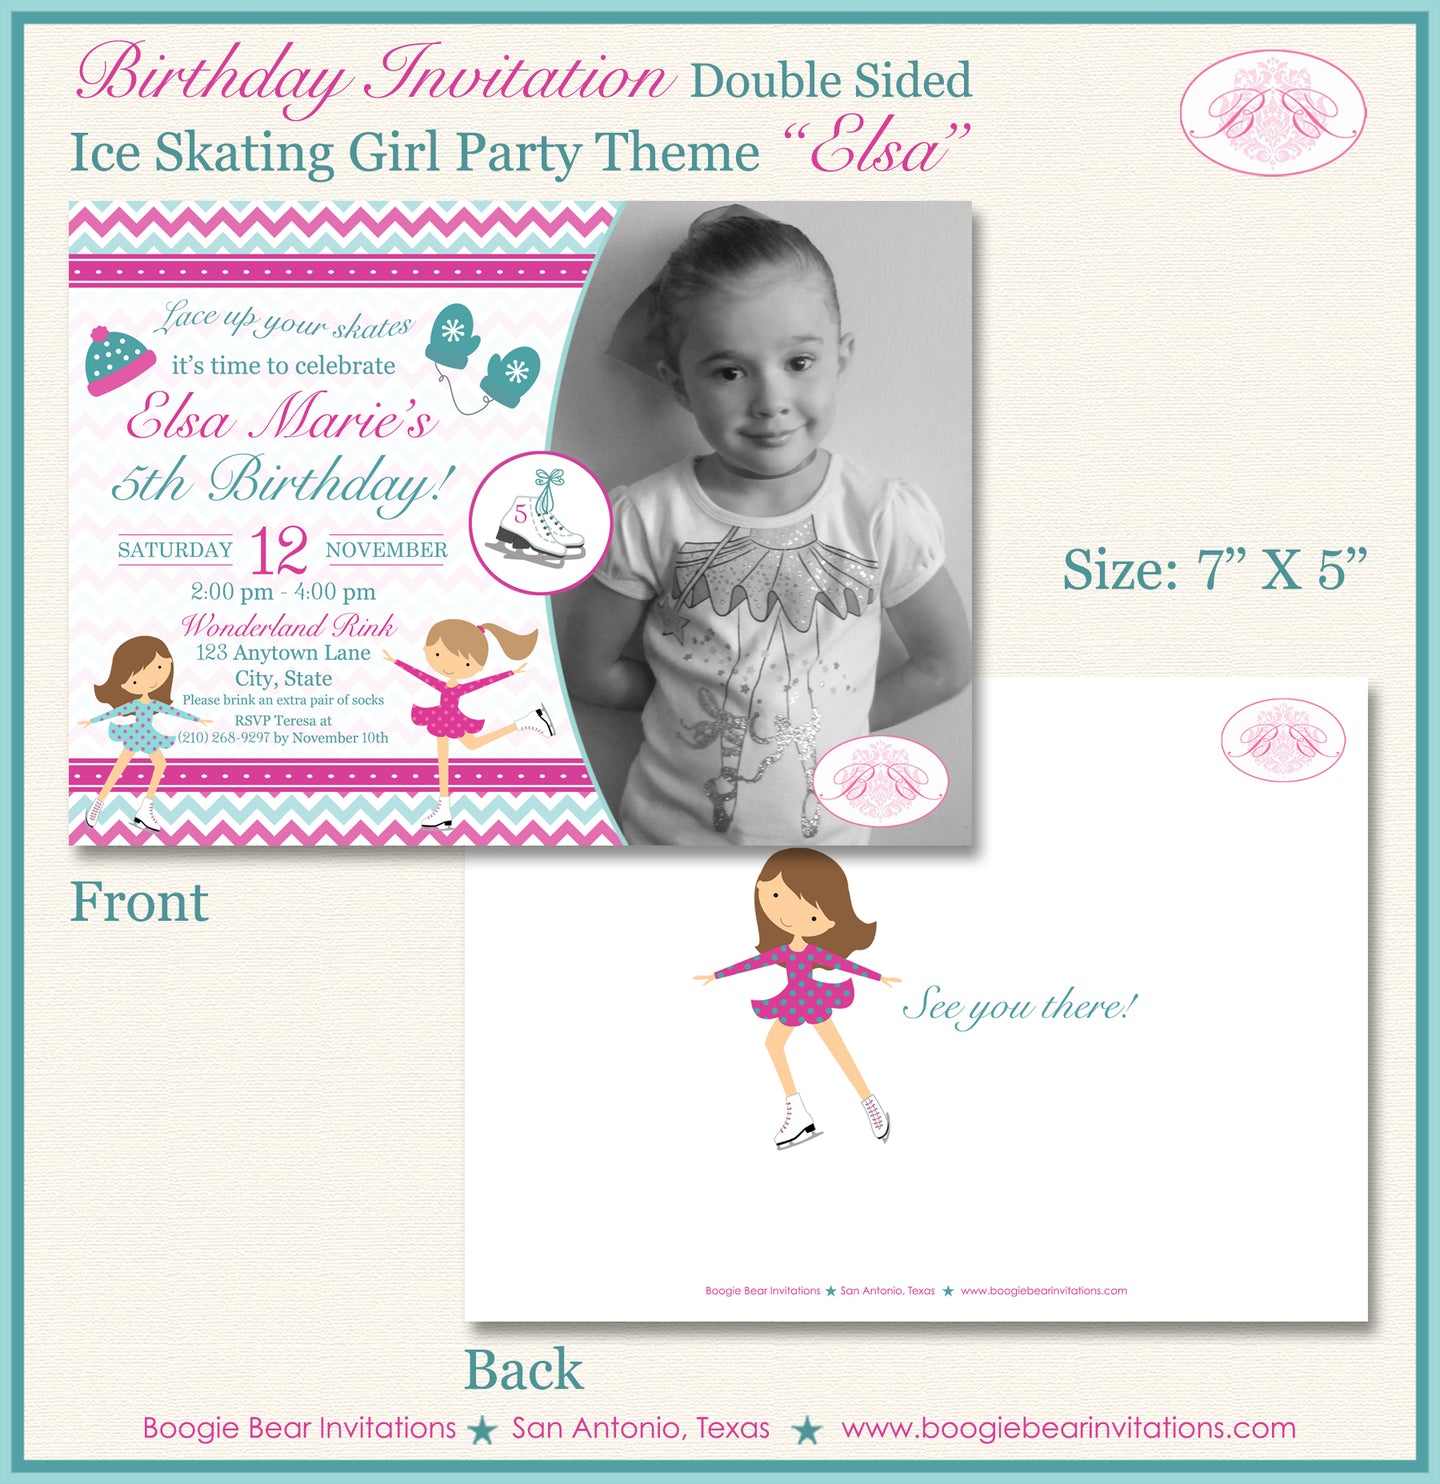 Pink Ice Skating Birthday Party Invitation Photo Girl Boogie Bear Invitations Elsa Theme Paperless Printable Printed